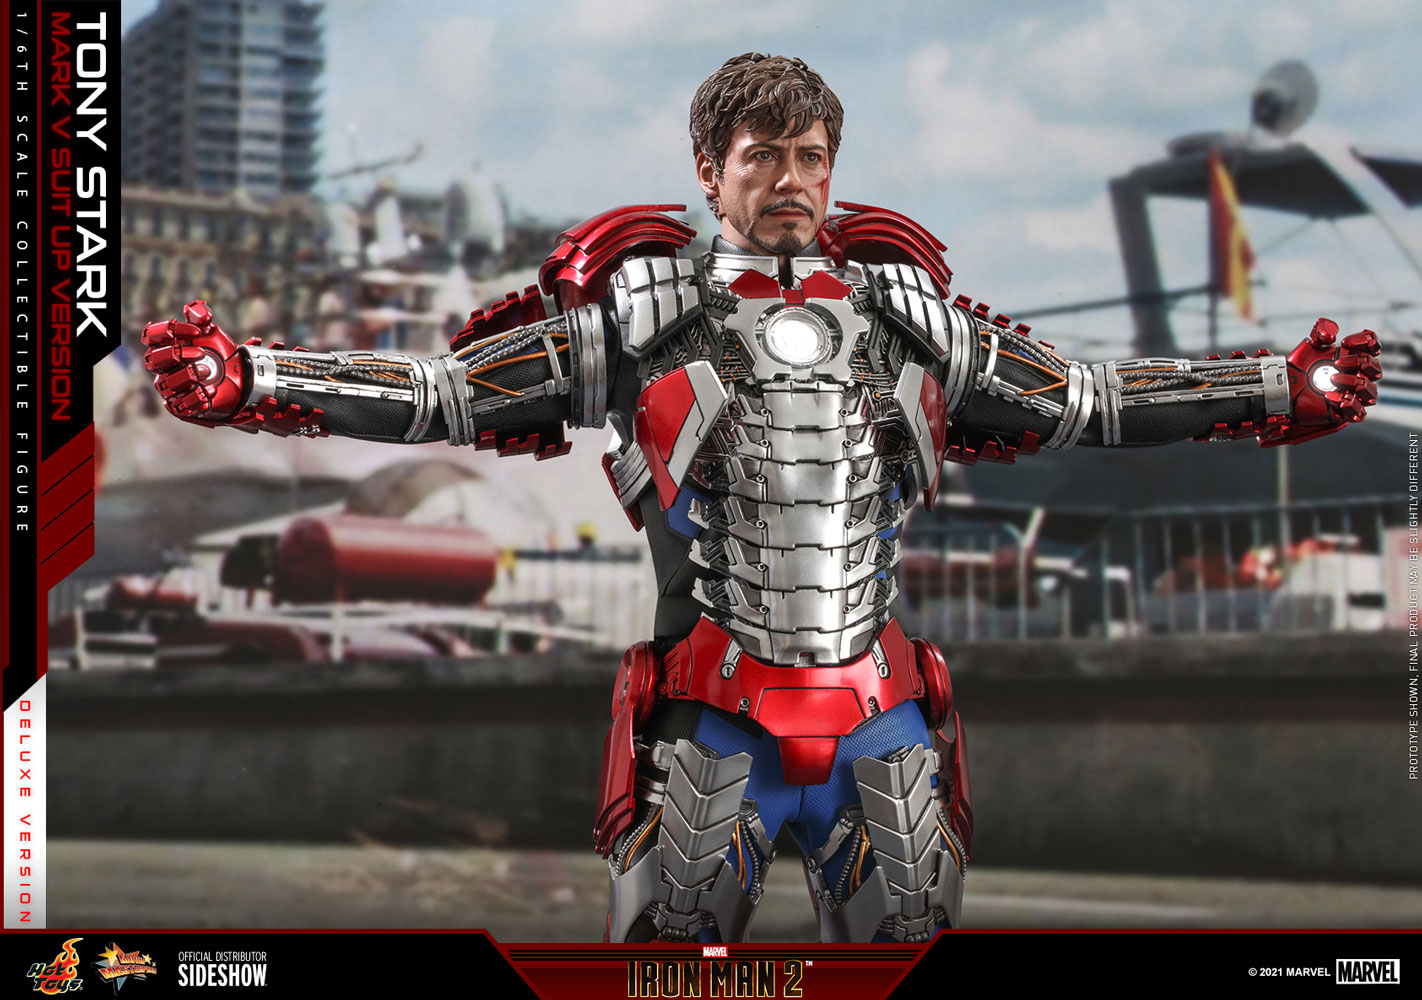 Tony Stark (Mark V Suit Up Version) Deluxe